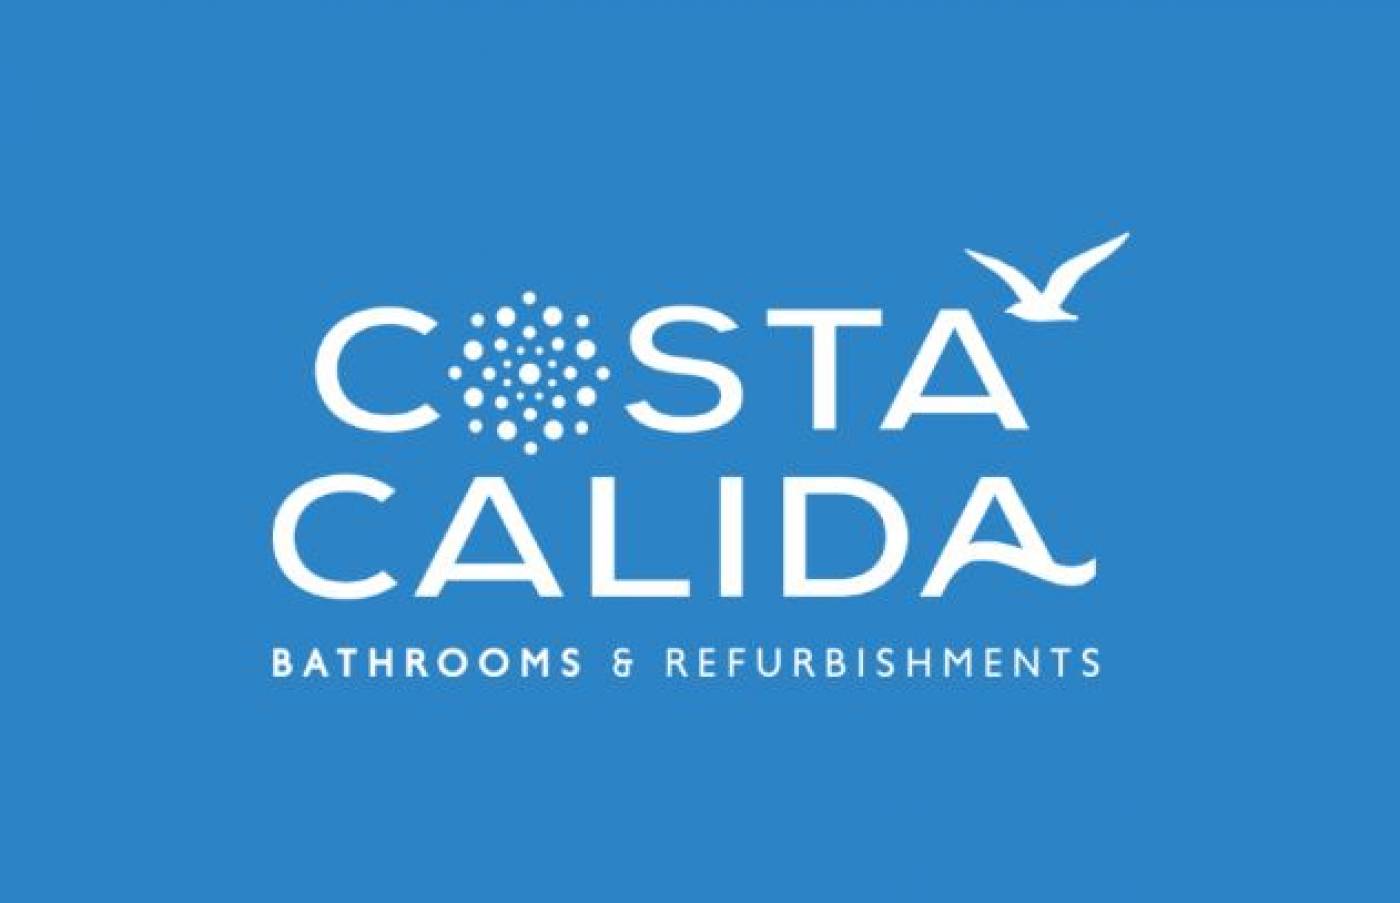 Costa Calida Bathrooms high-quality bathroom tiling and refurbishment in Murcia and Alicante